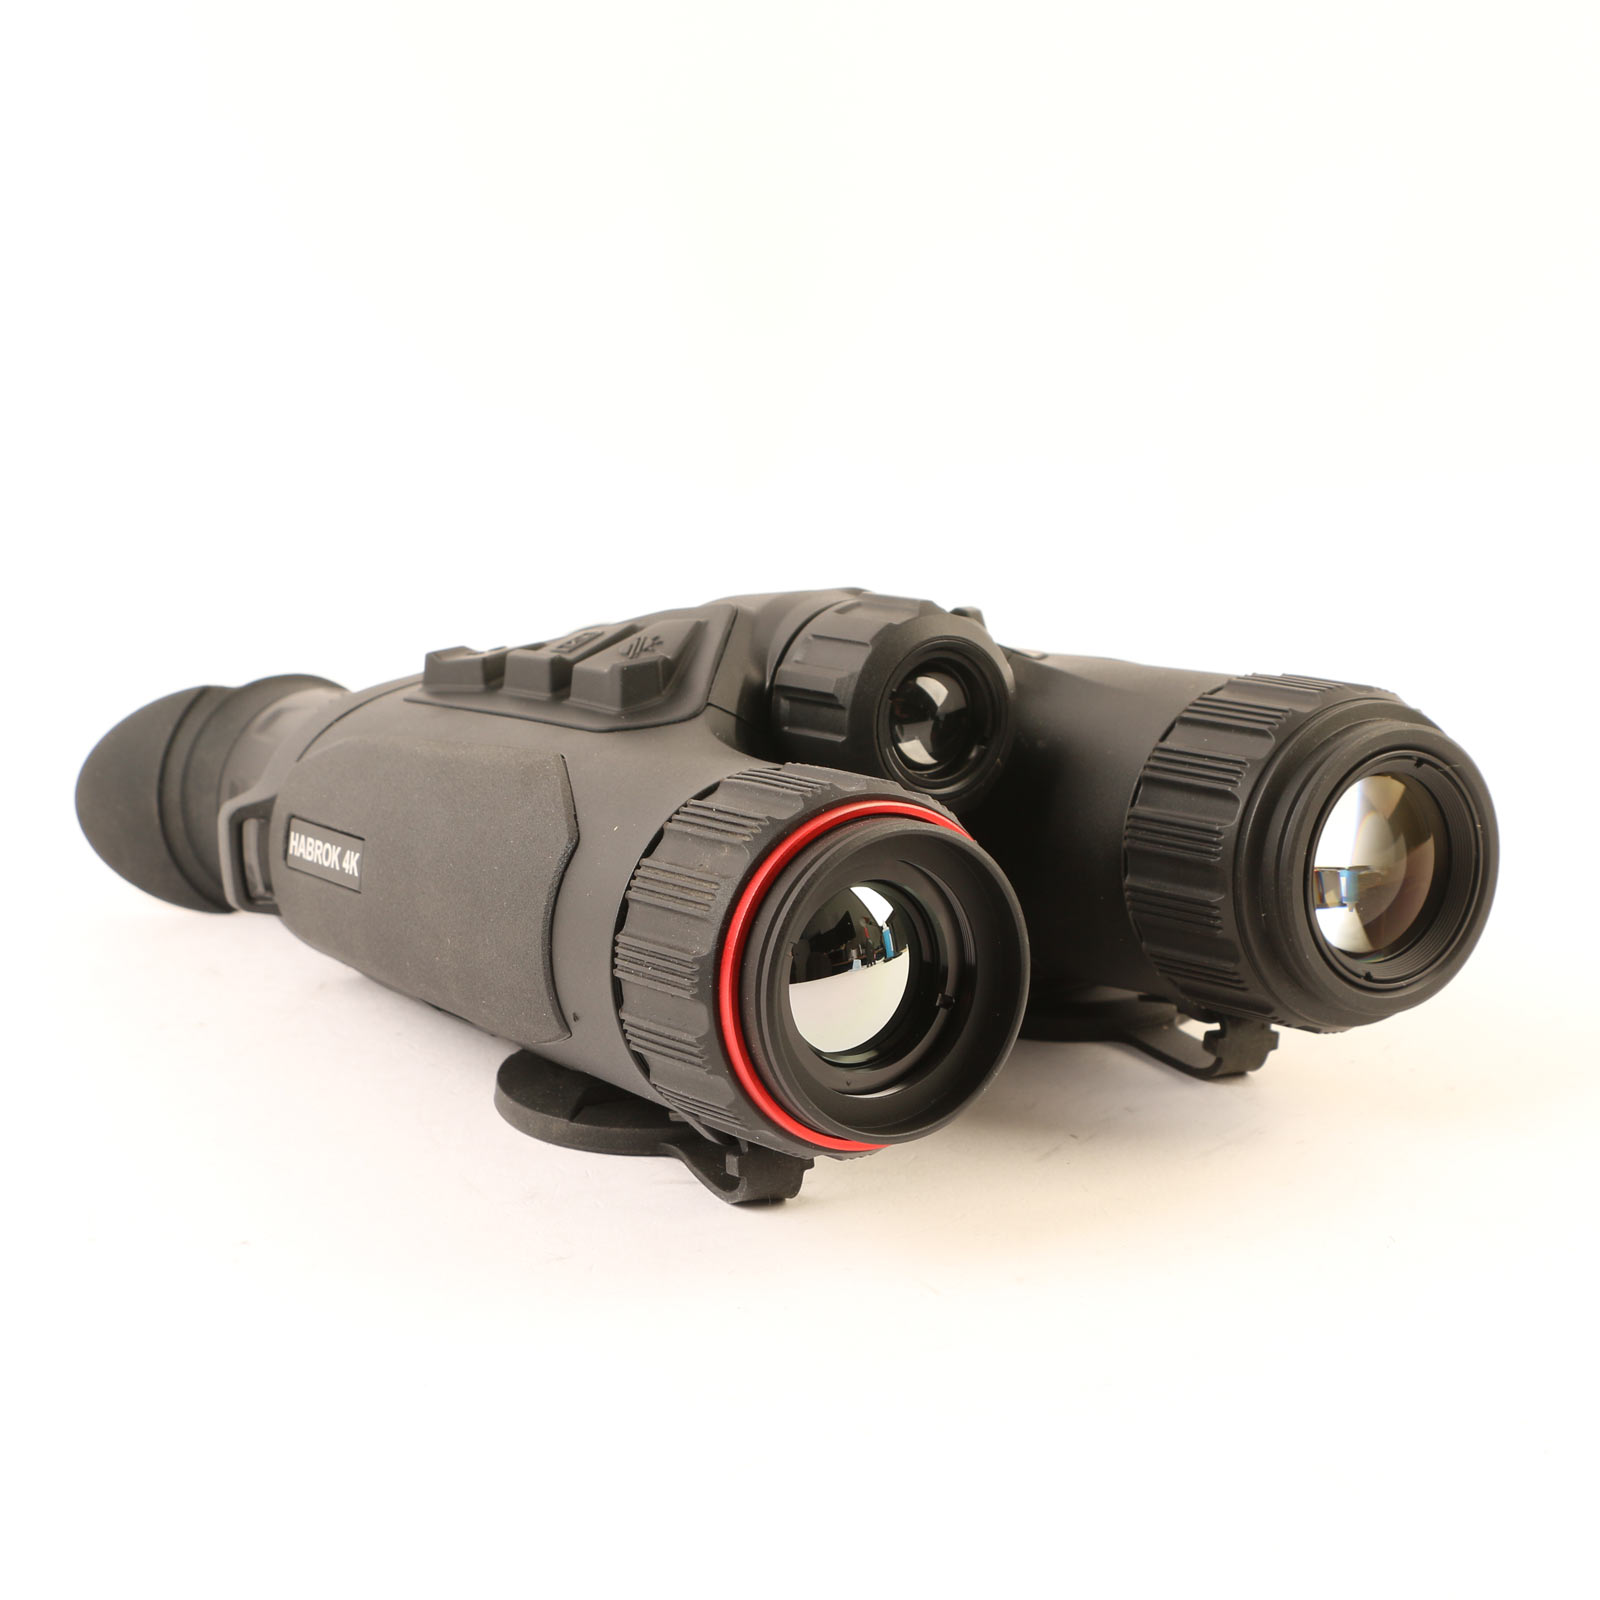 USED HIKMICRO Habrok 4K 256px HE25L Thermal and Optical Binoculars